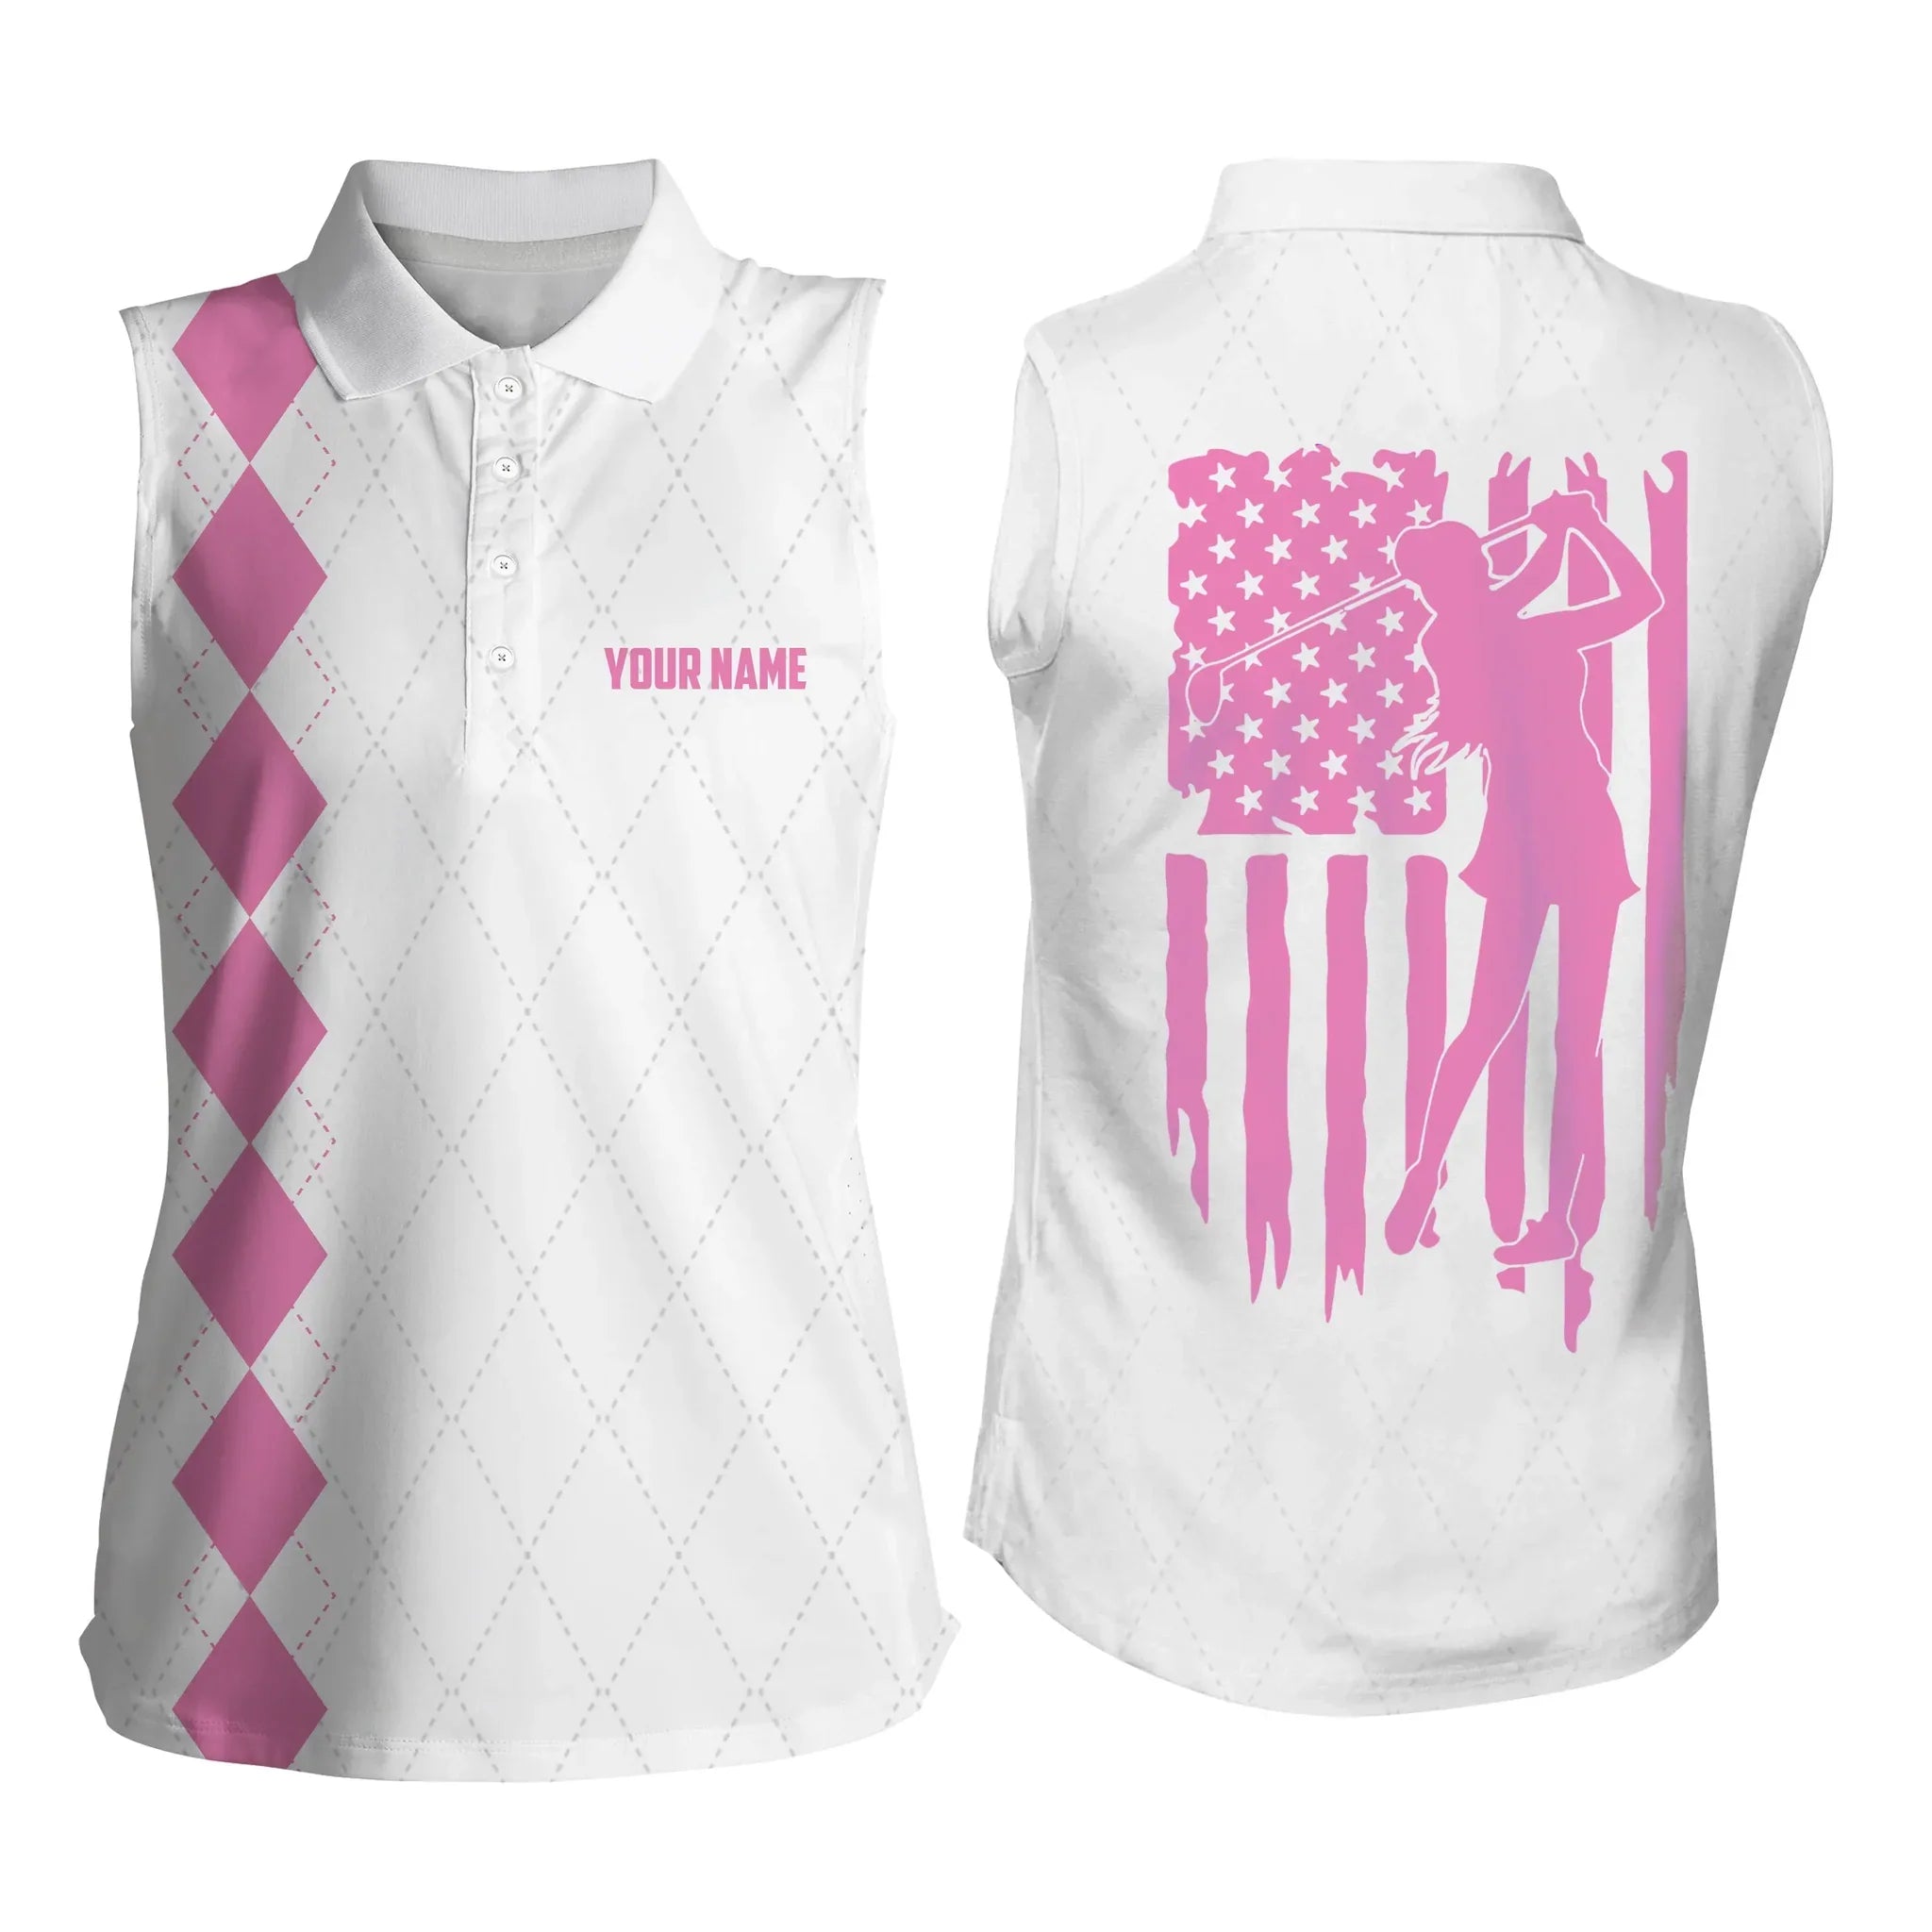 Womens Sleeveless polo shirt/ American flag patriotic golf shirts/ custom name golf gifts